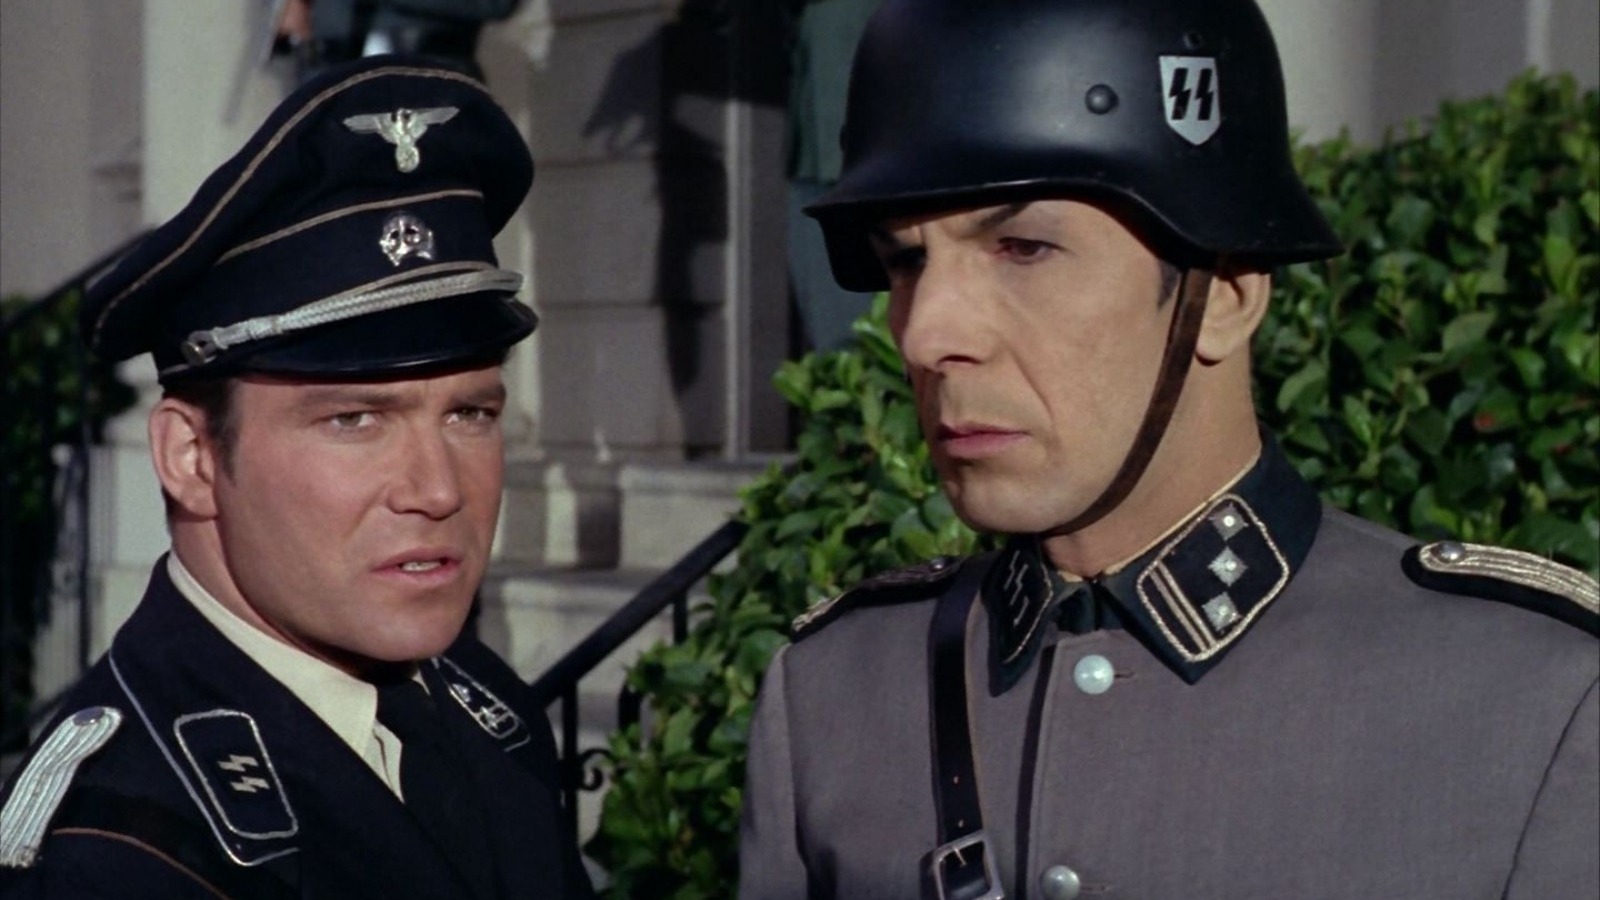 Star Trek's Nazi Portrayal Got A Season 2 Episode Banned In Germany For Decades